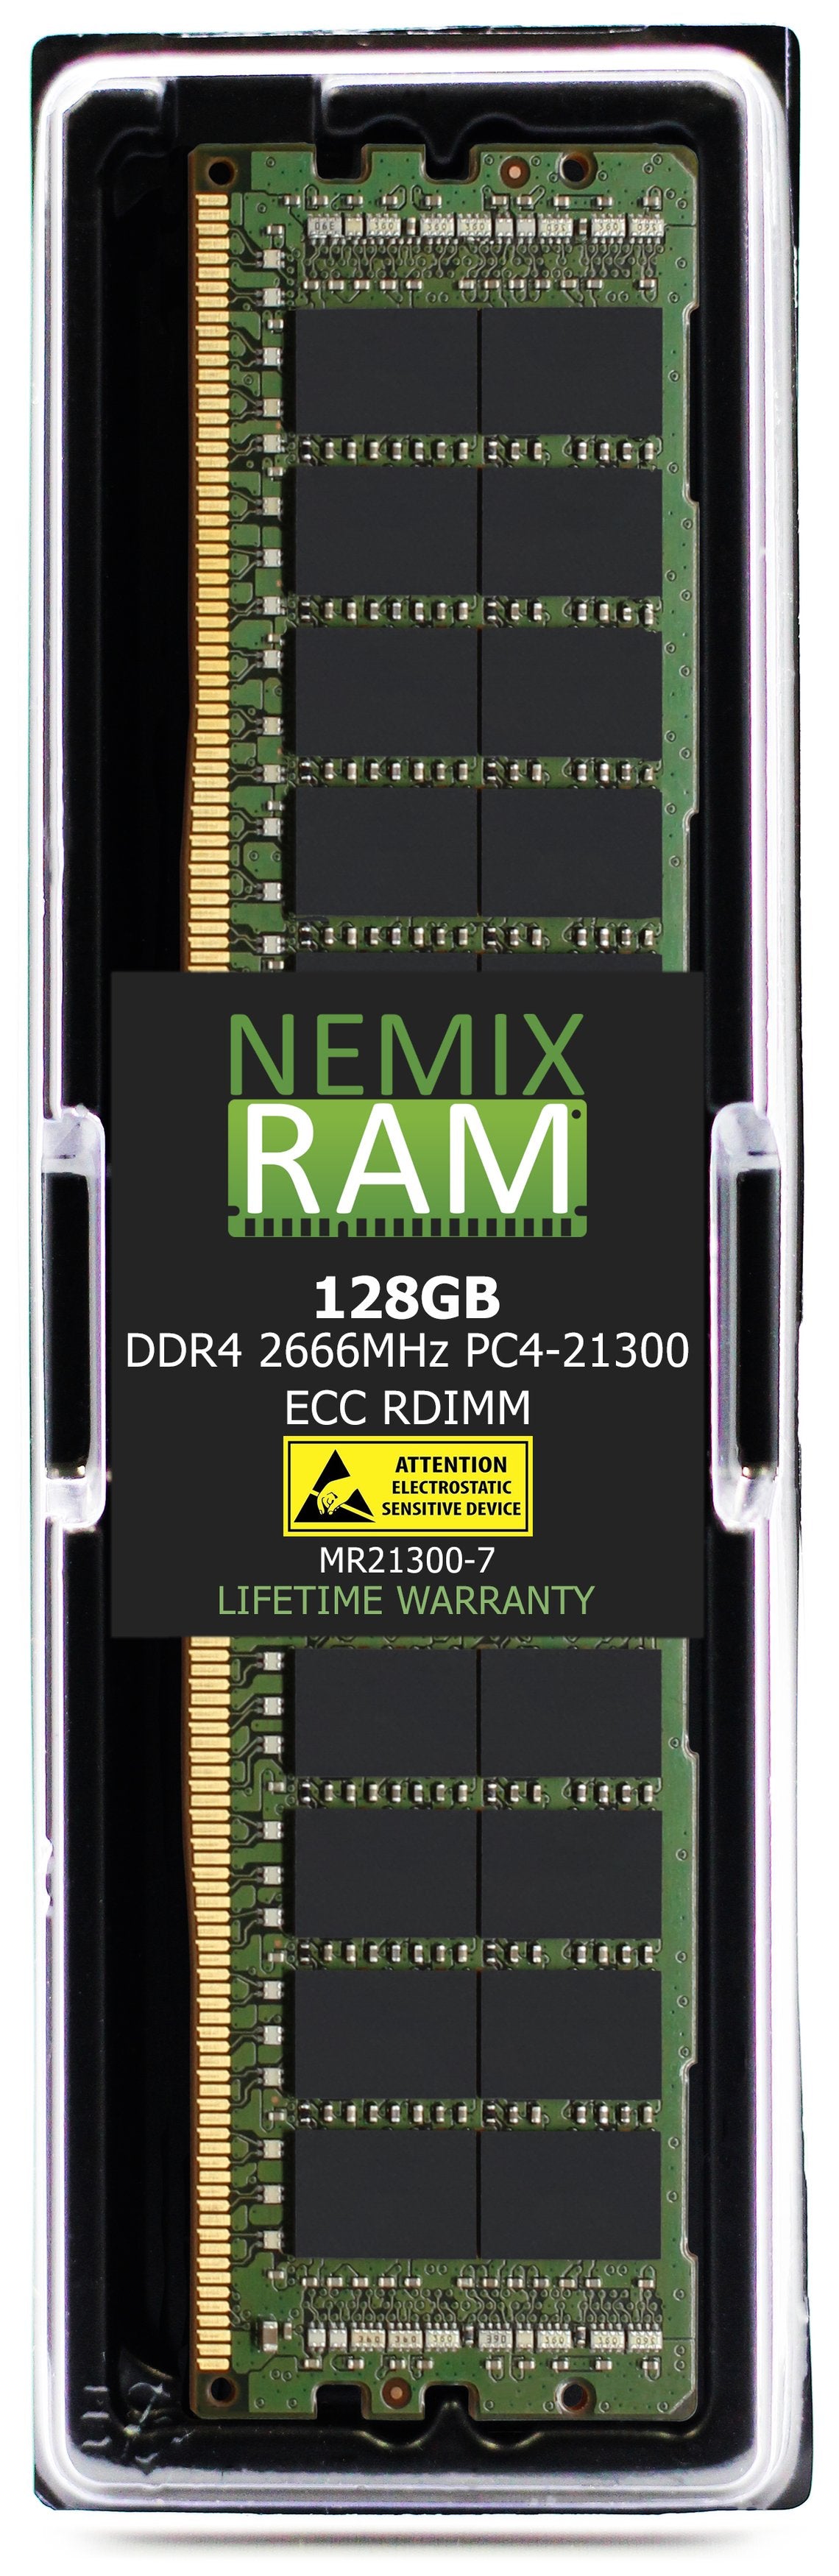 Hynix HMABAGR7A4R4N-VN 128GB DDR4 2666MHZ PC4-21300 RDIMM Compatible Memory Module